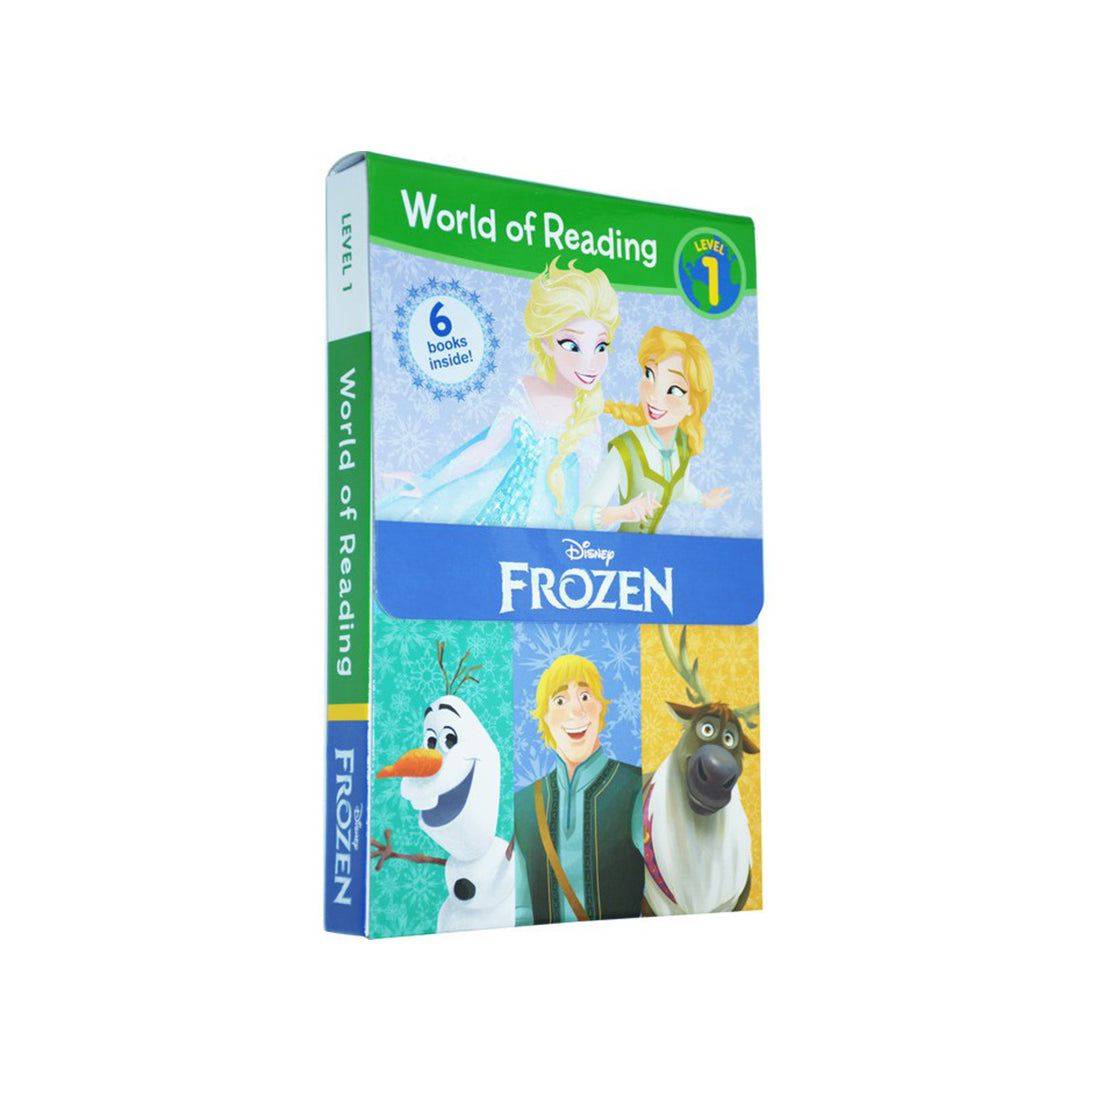 World of Reading: Disney Frozen Set - 6 volume